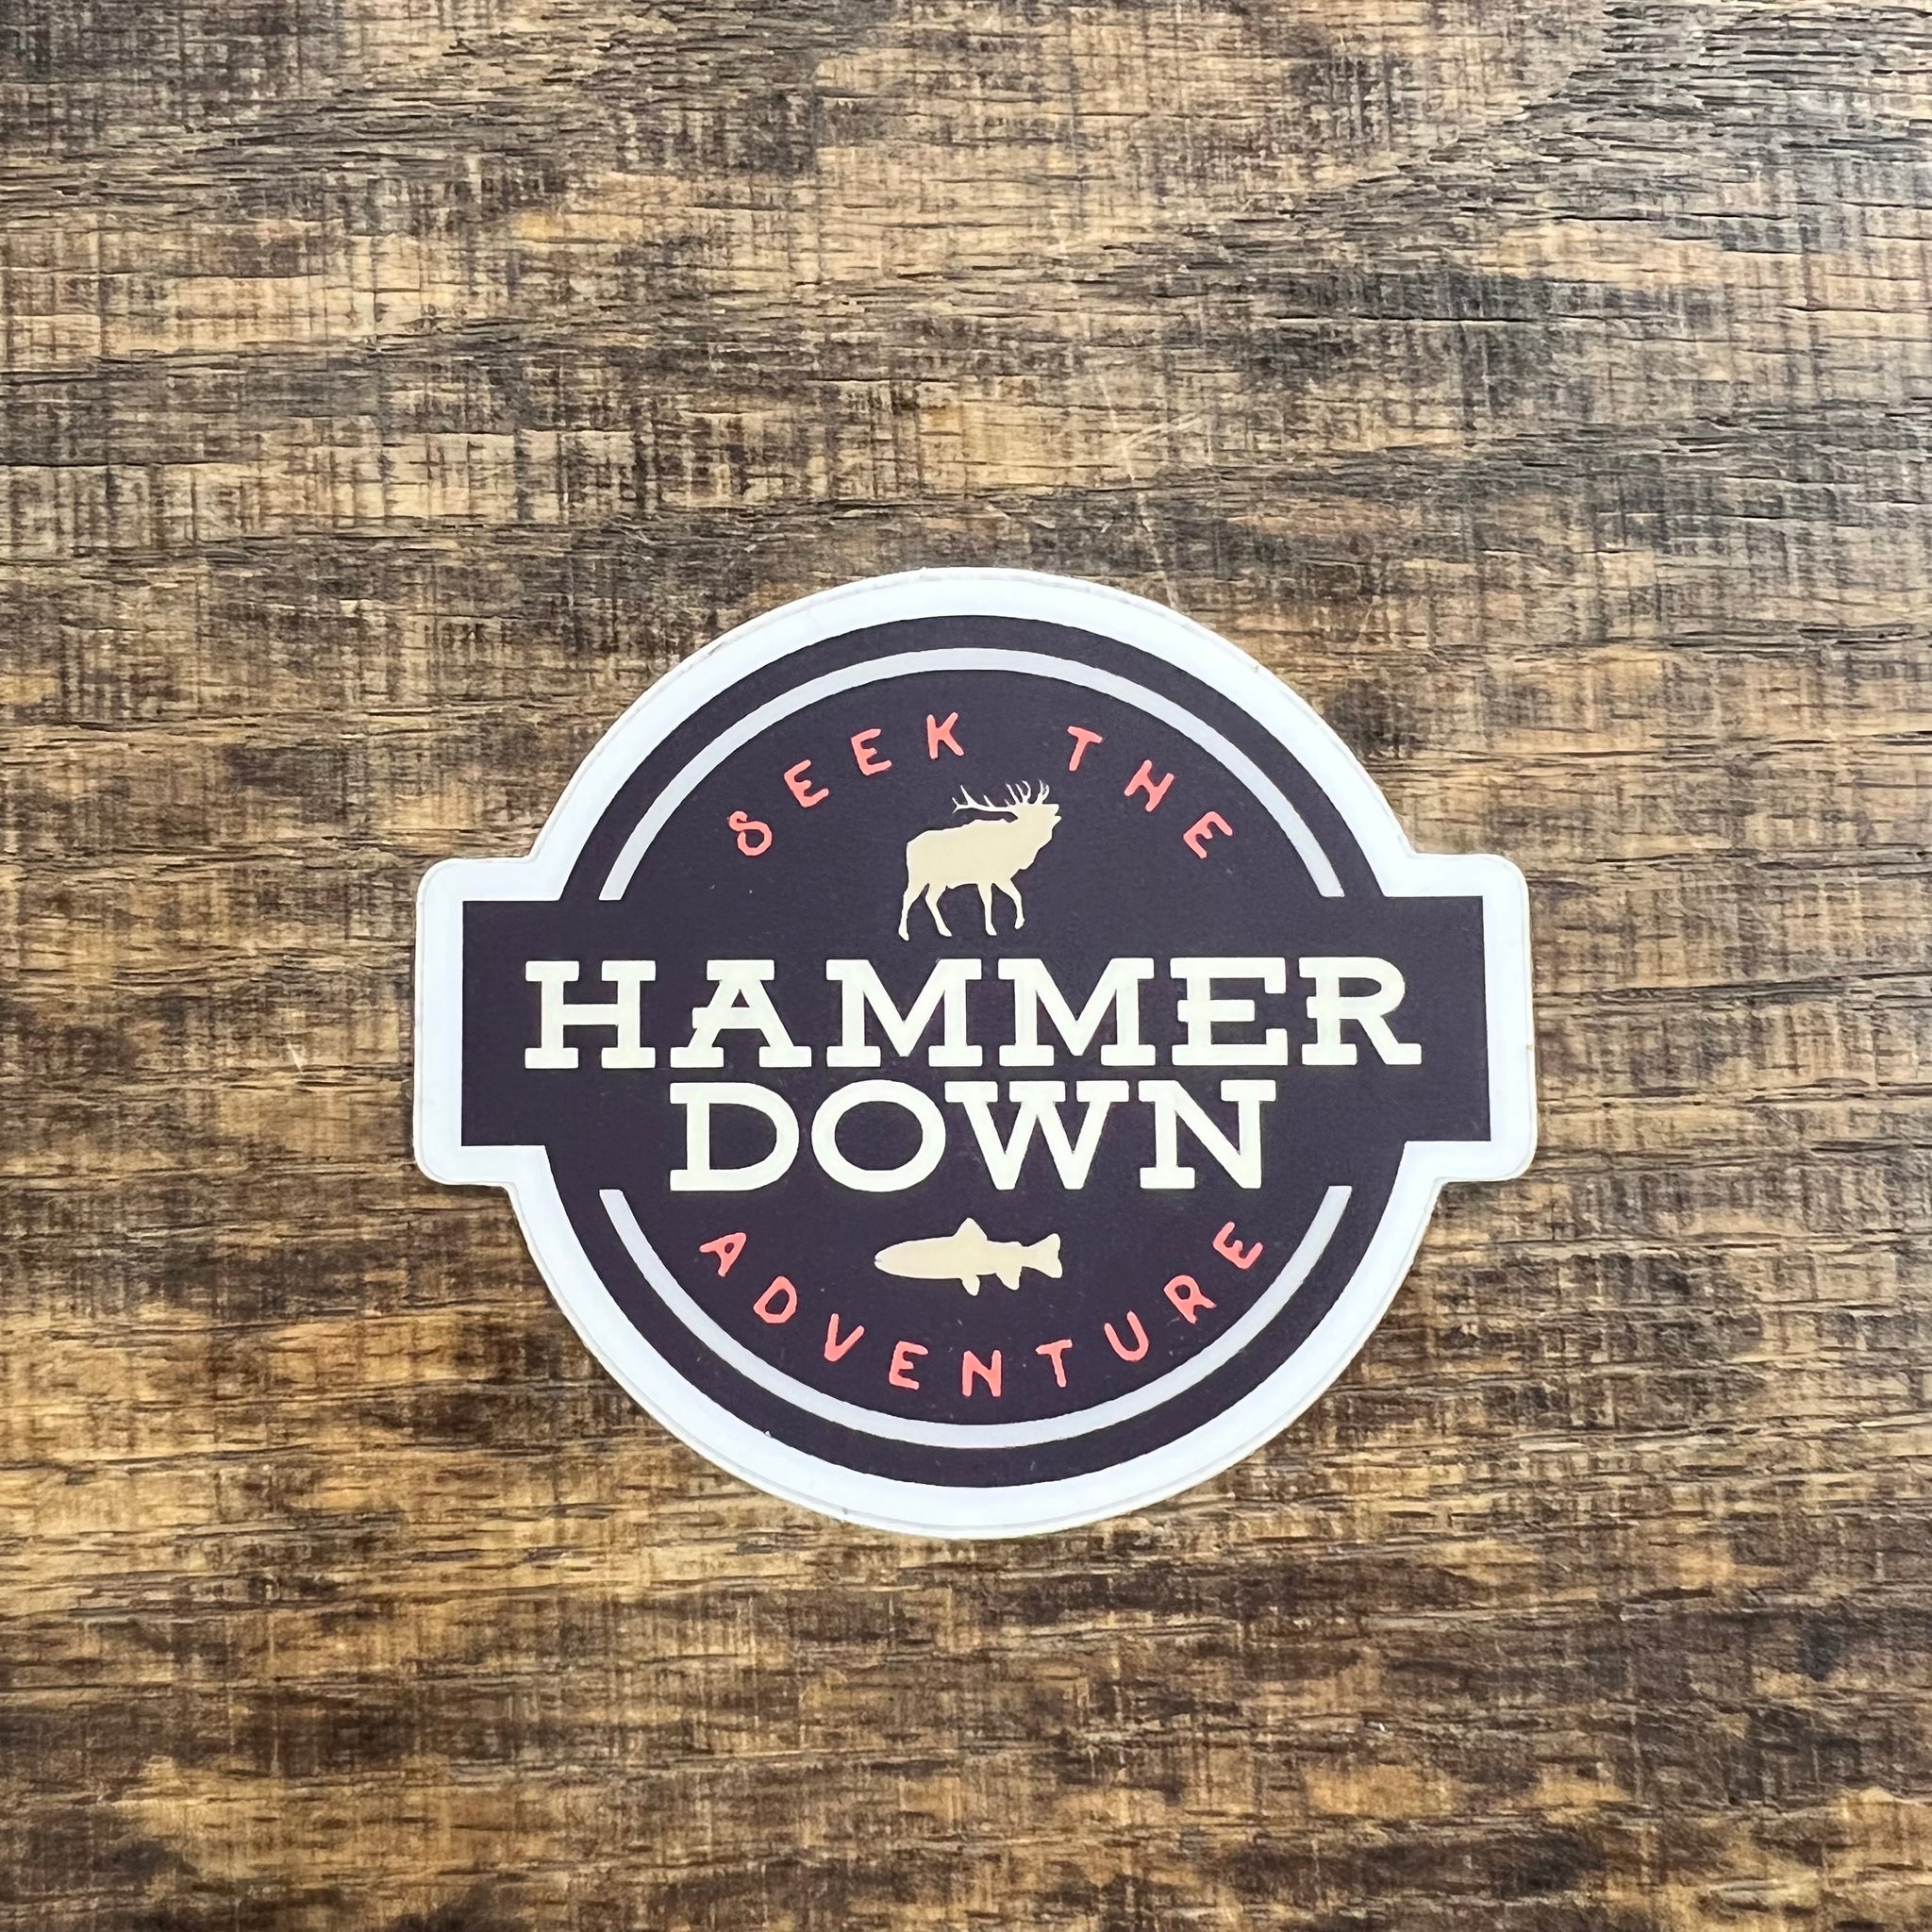 Hammer Down "STA Badge" Sticker - Black and White